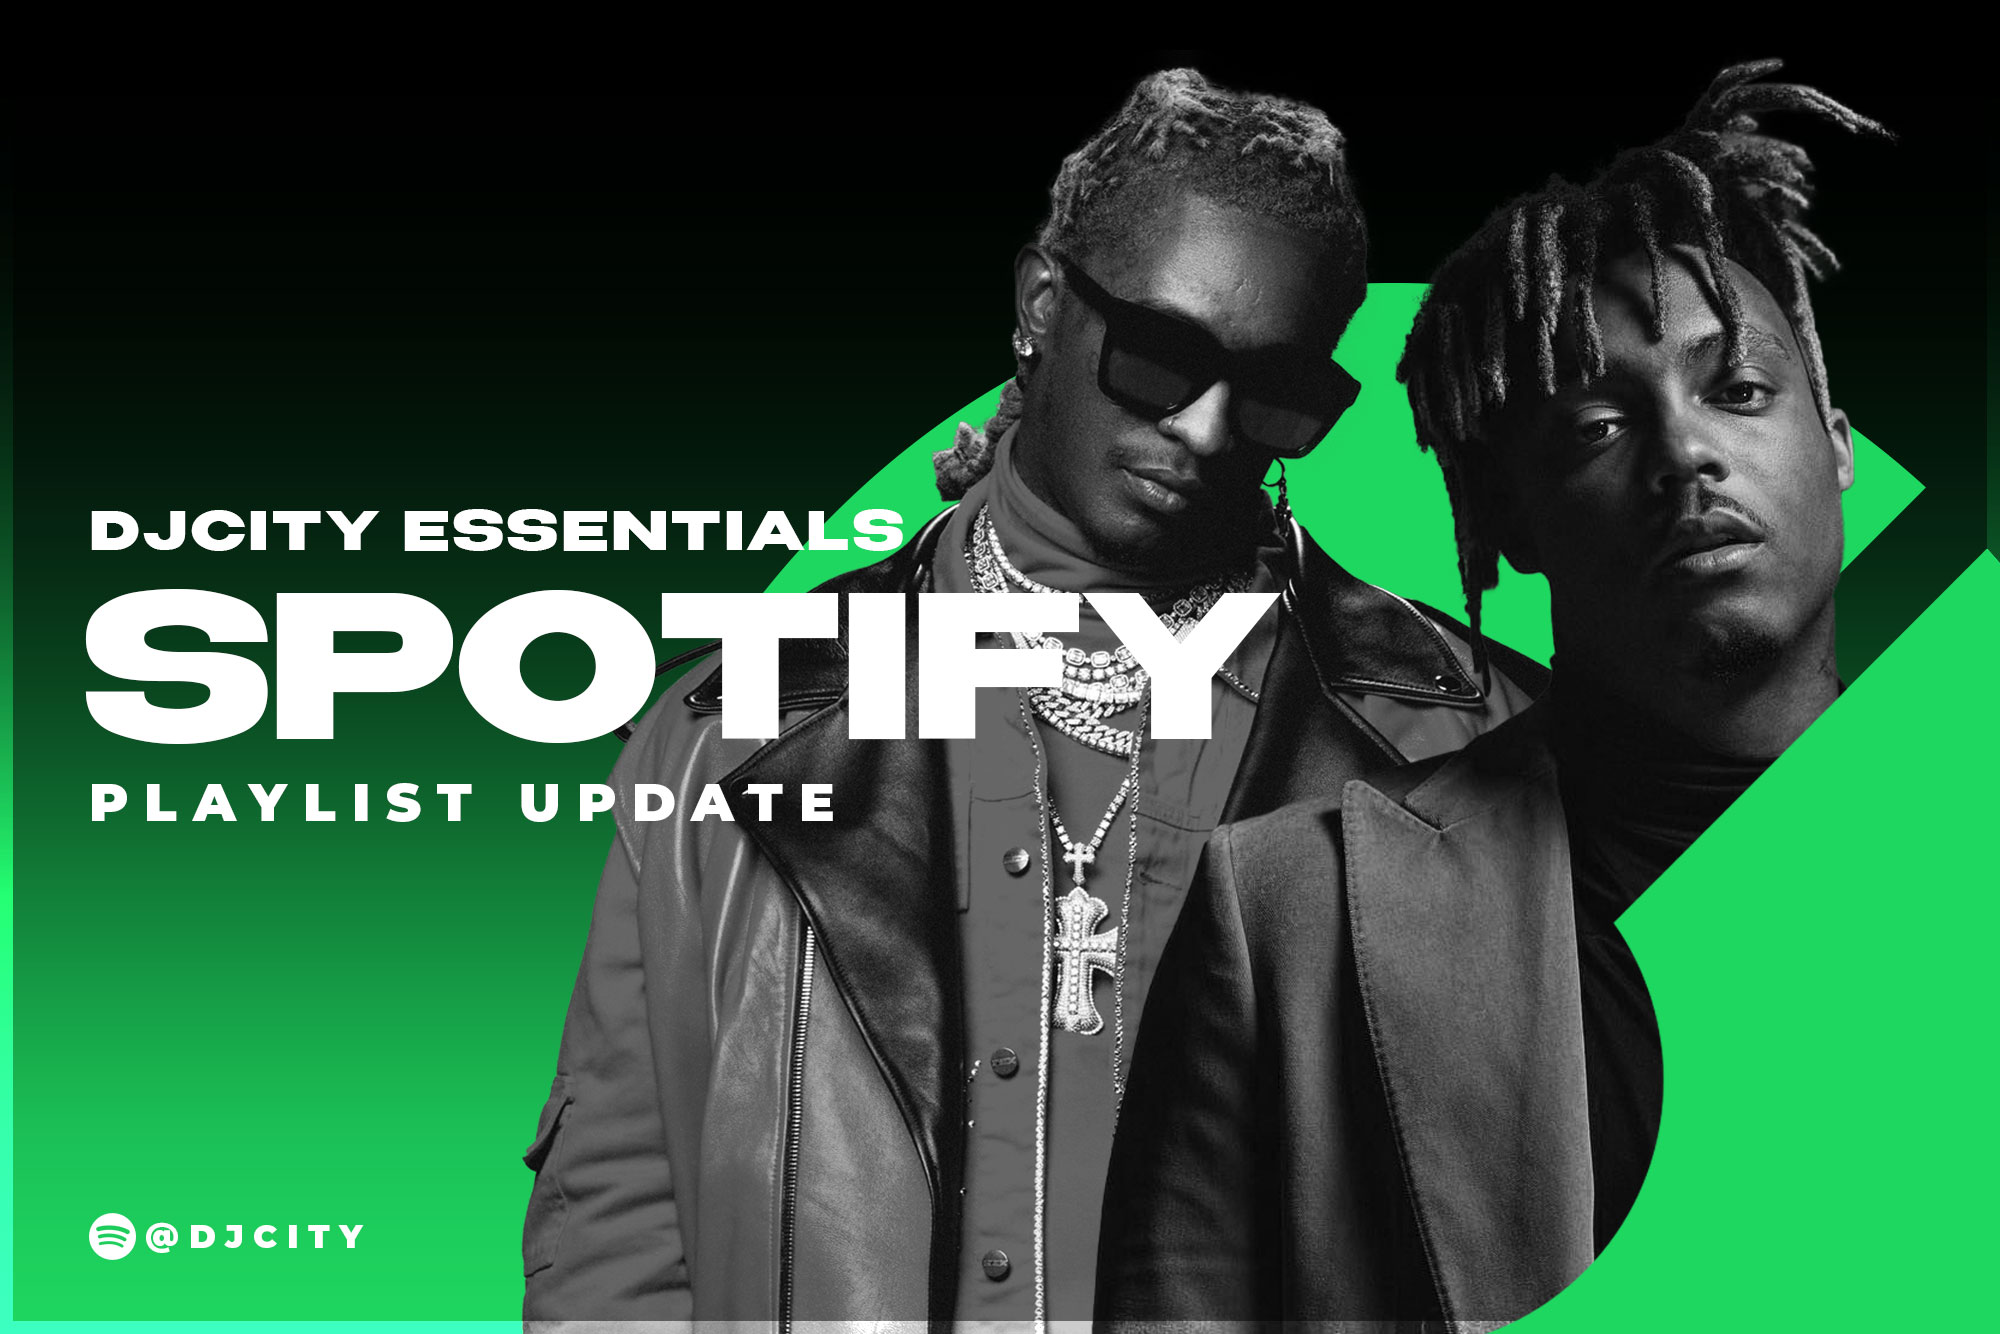 DJcity’s Spotify Playlist Update: Jan. 19